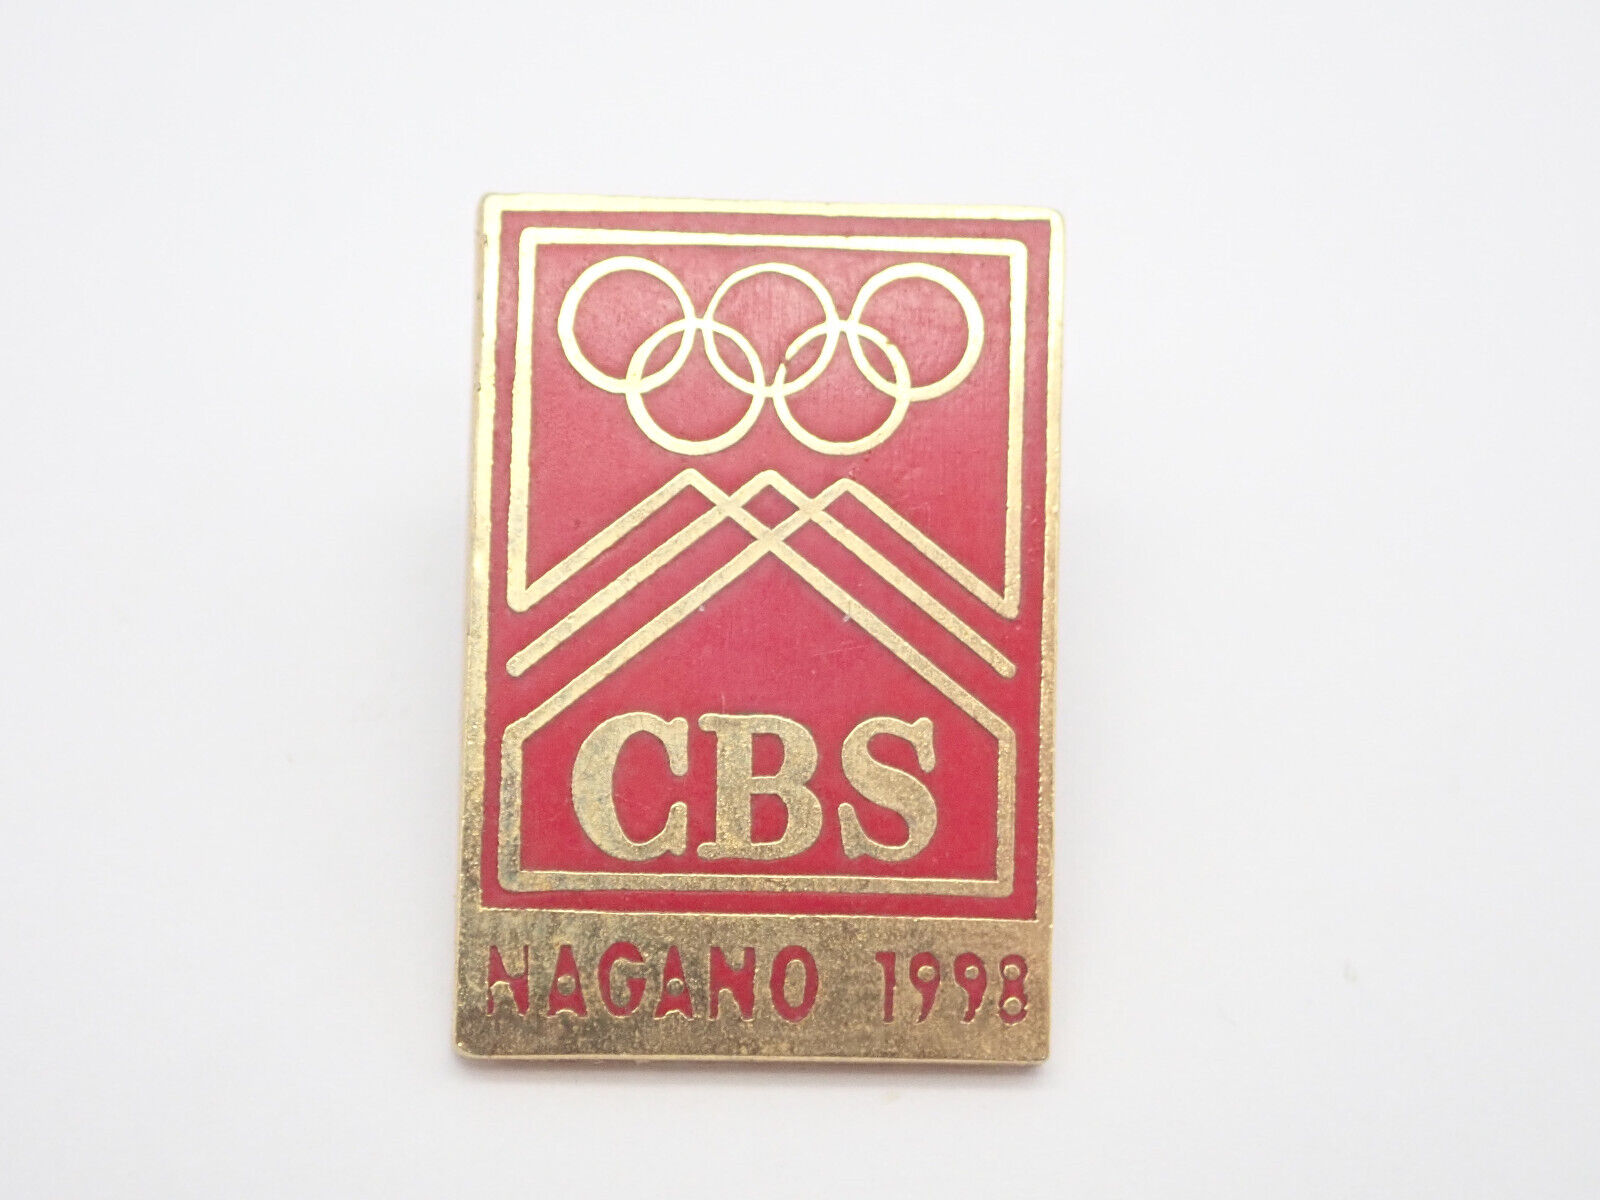 CBS Nagano Winter Olympics 1998 Vintage Lapel Pin